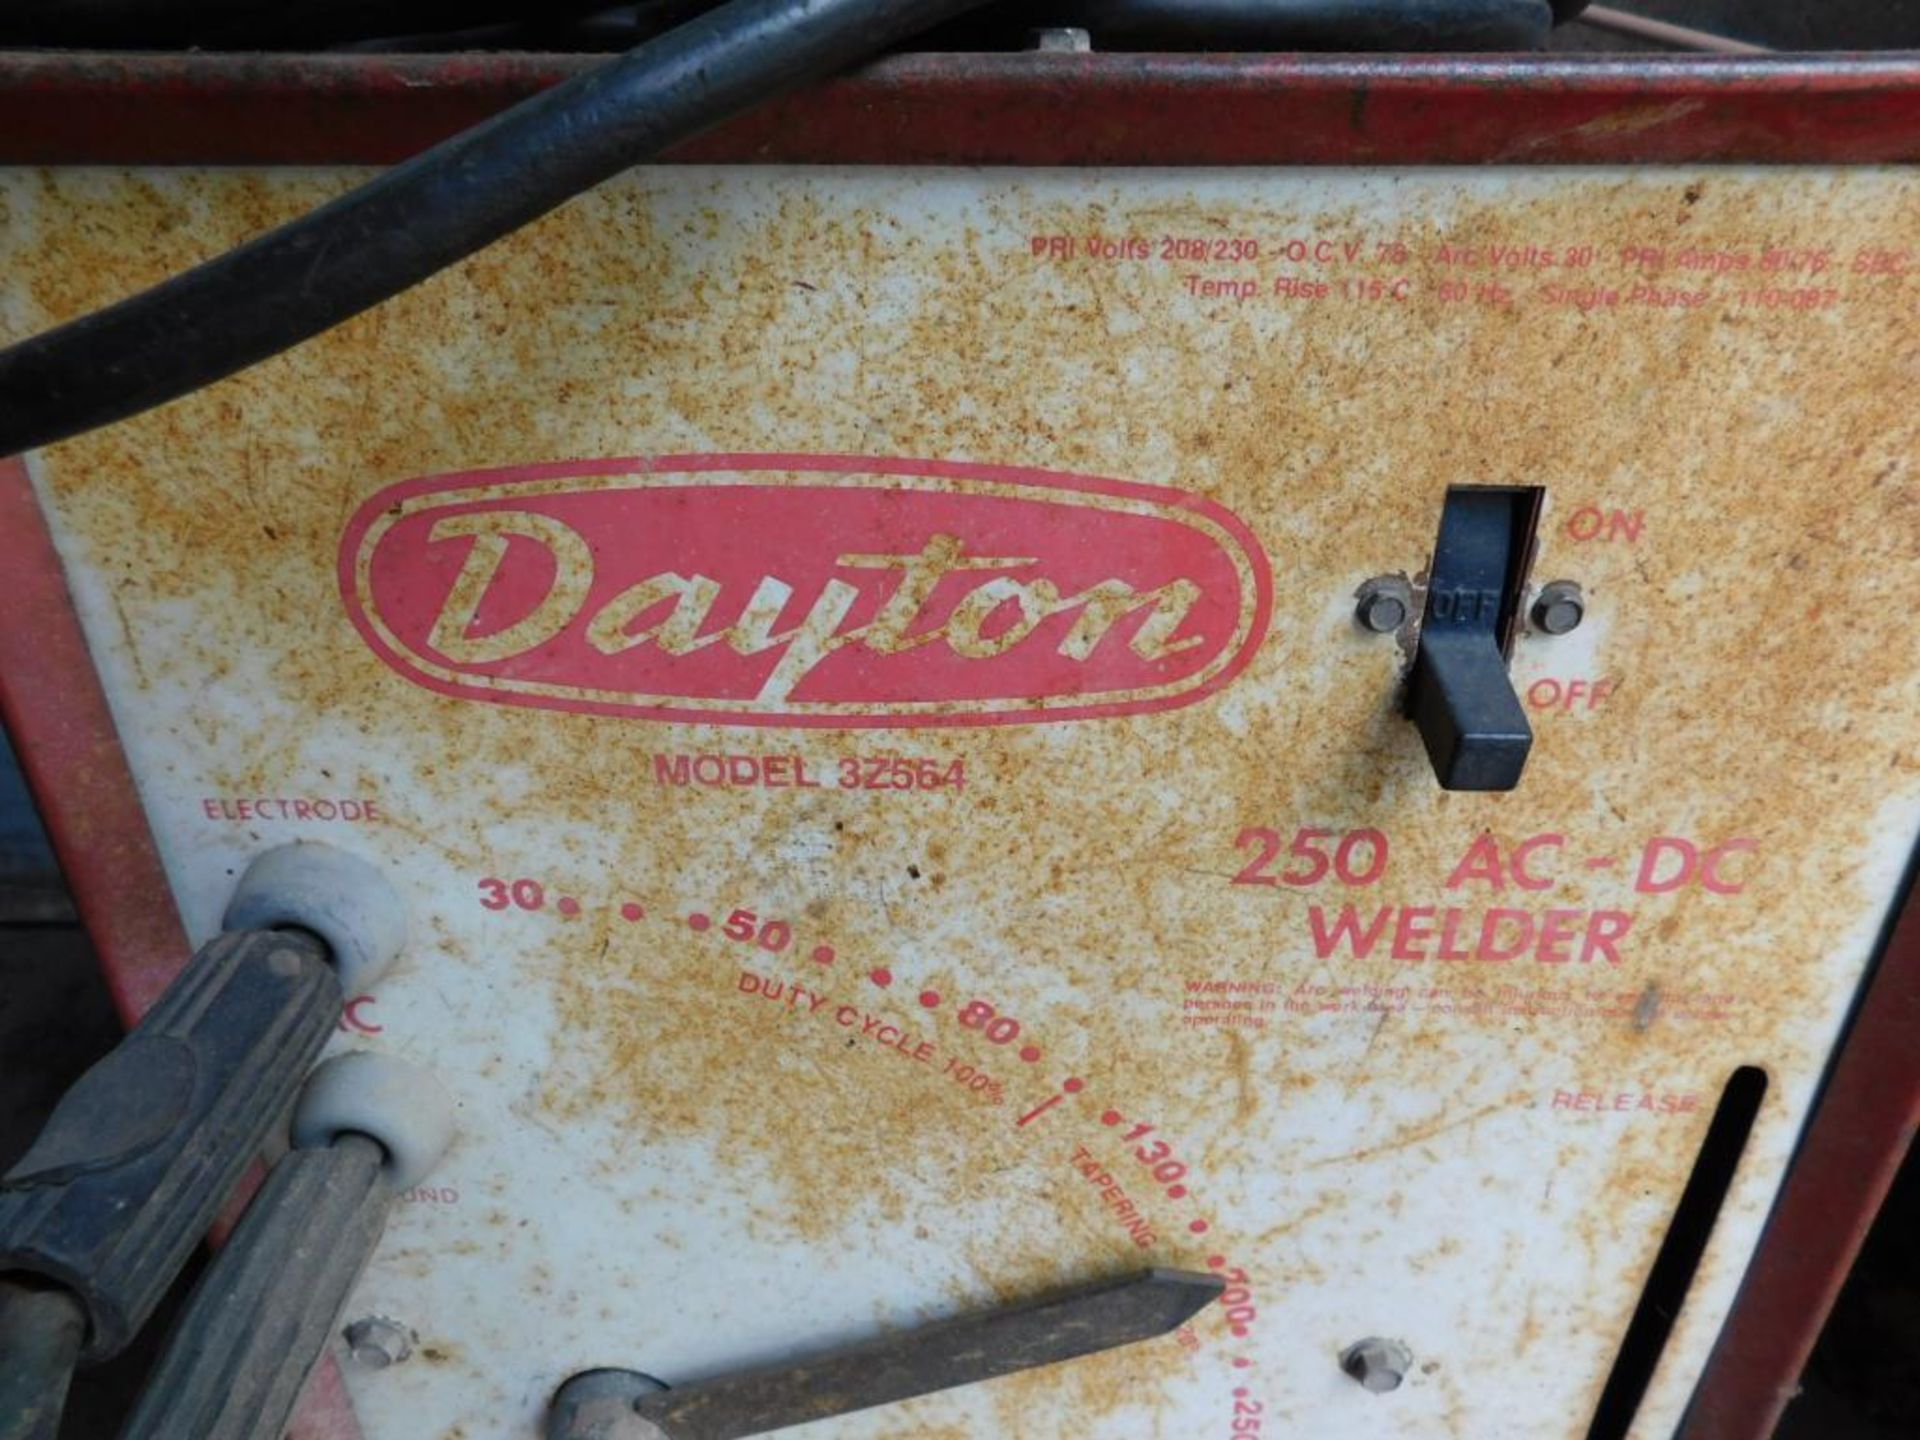 Dayton 250 Model 3Z564 AC-DC Welder - Image 4 of 4